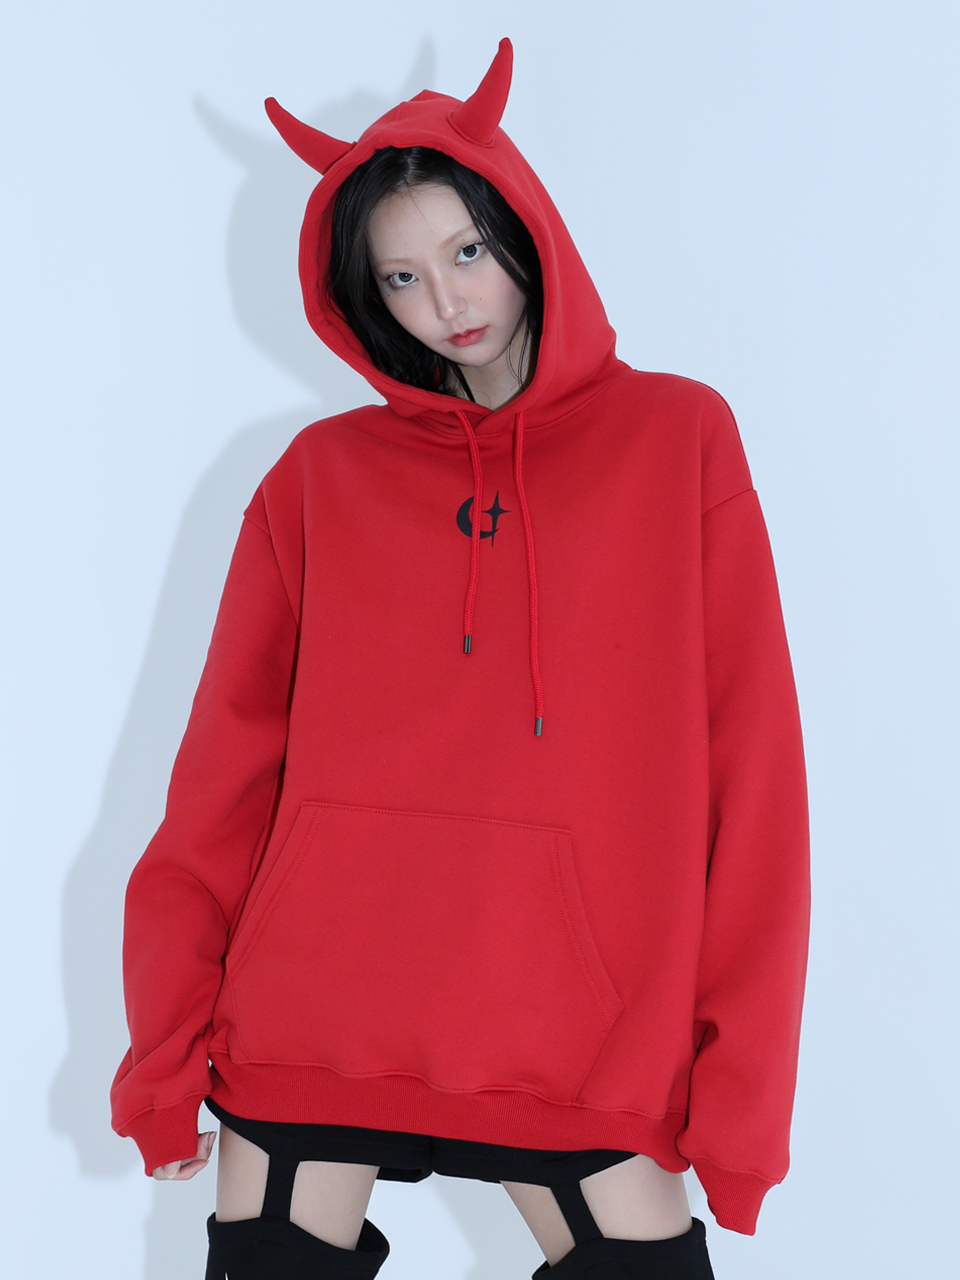 ZEPETO X devil hoodie - RED